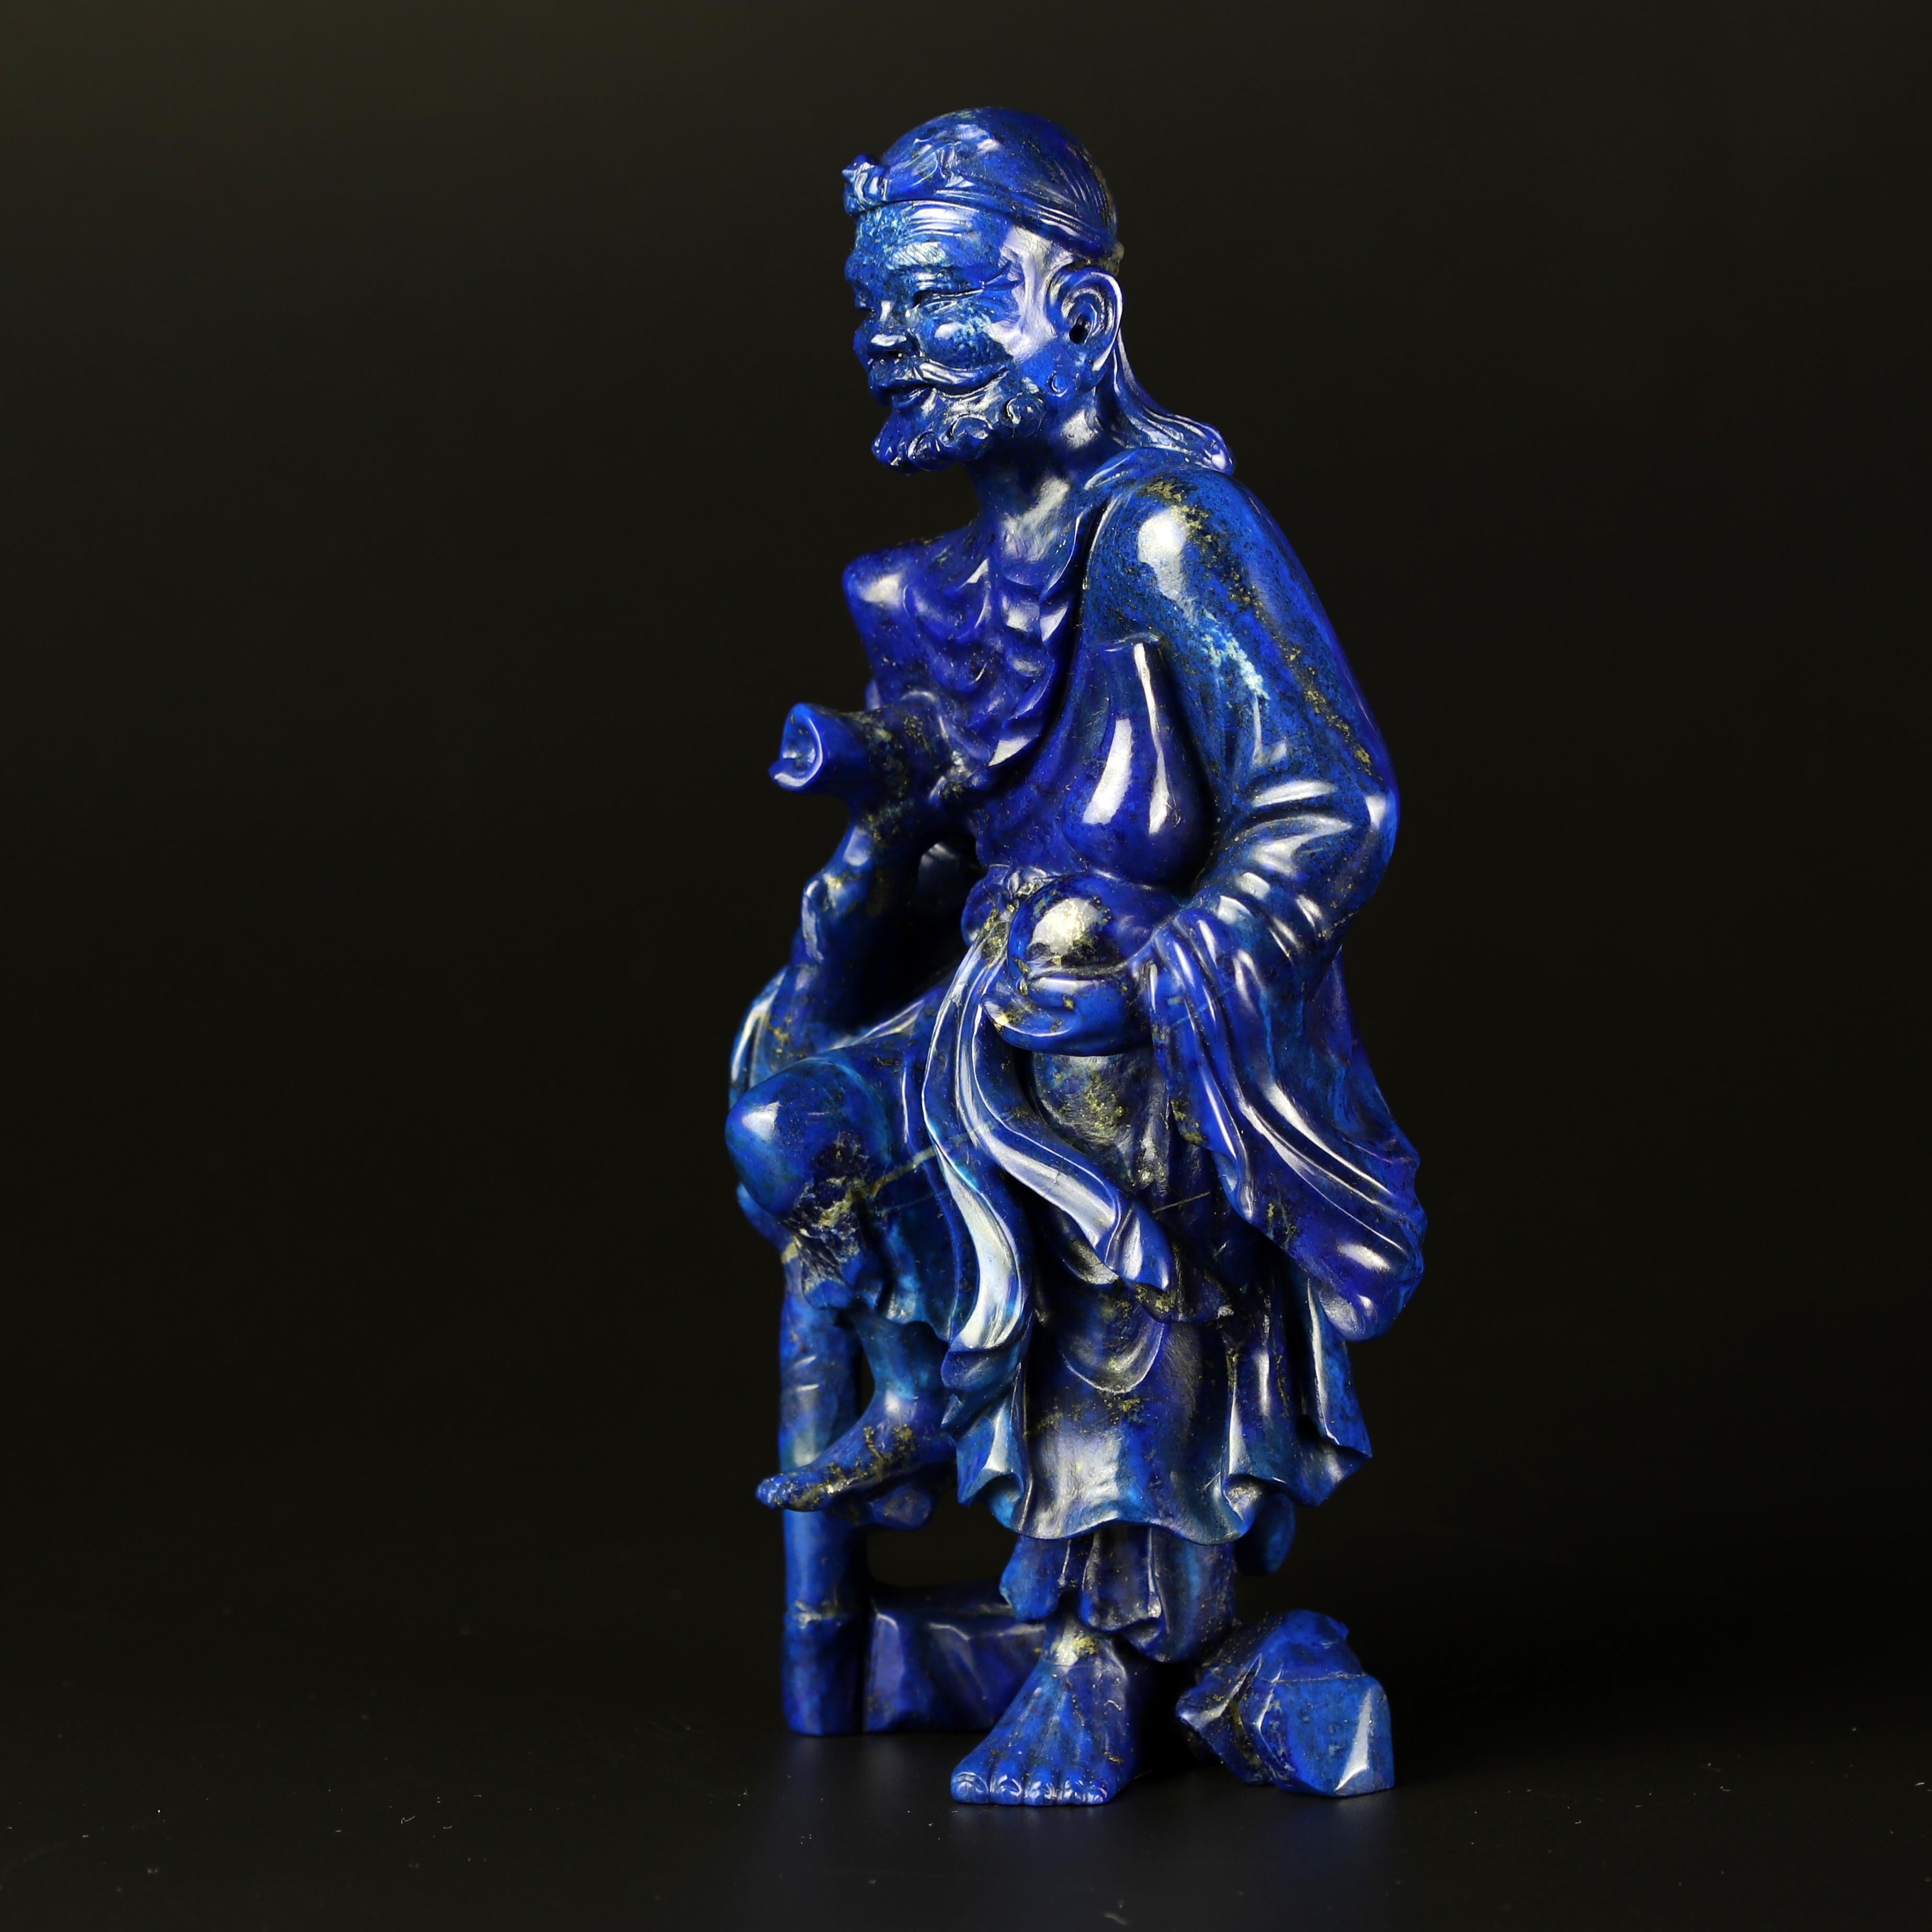 Chinese Export Lapis Lazuli Man Figurine Carved Human Spiritual Artisanal Statue Sculpture For Sale